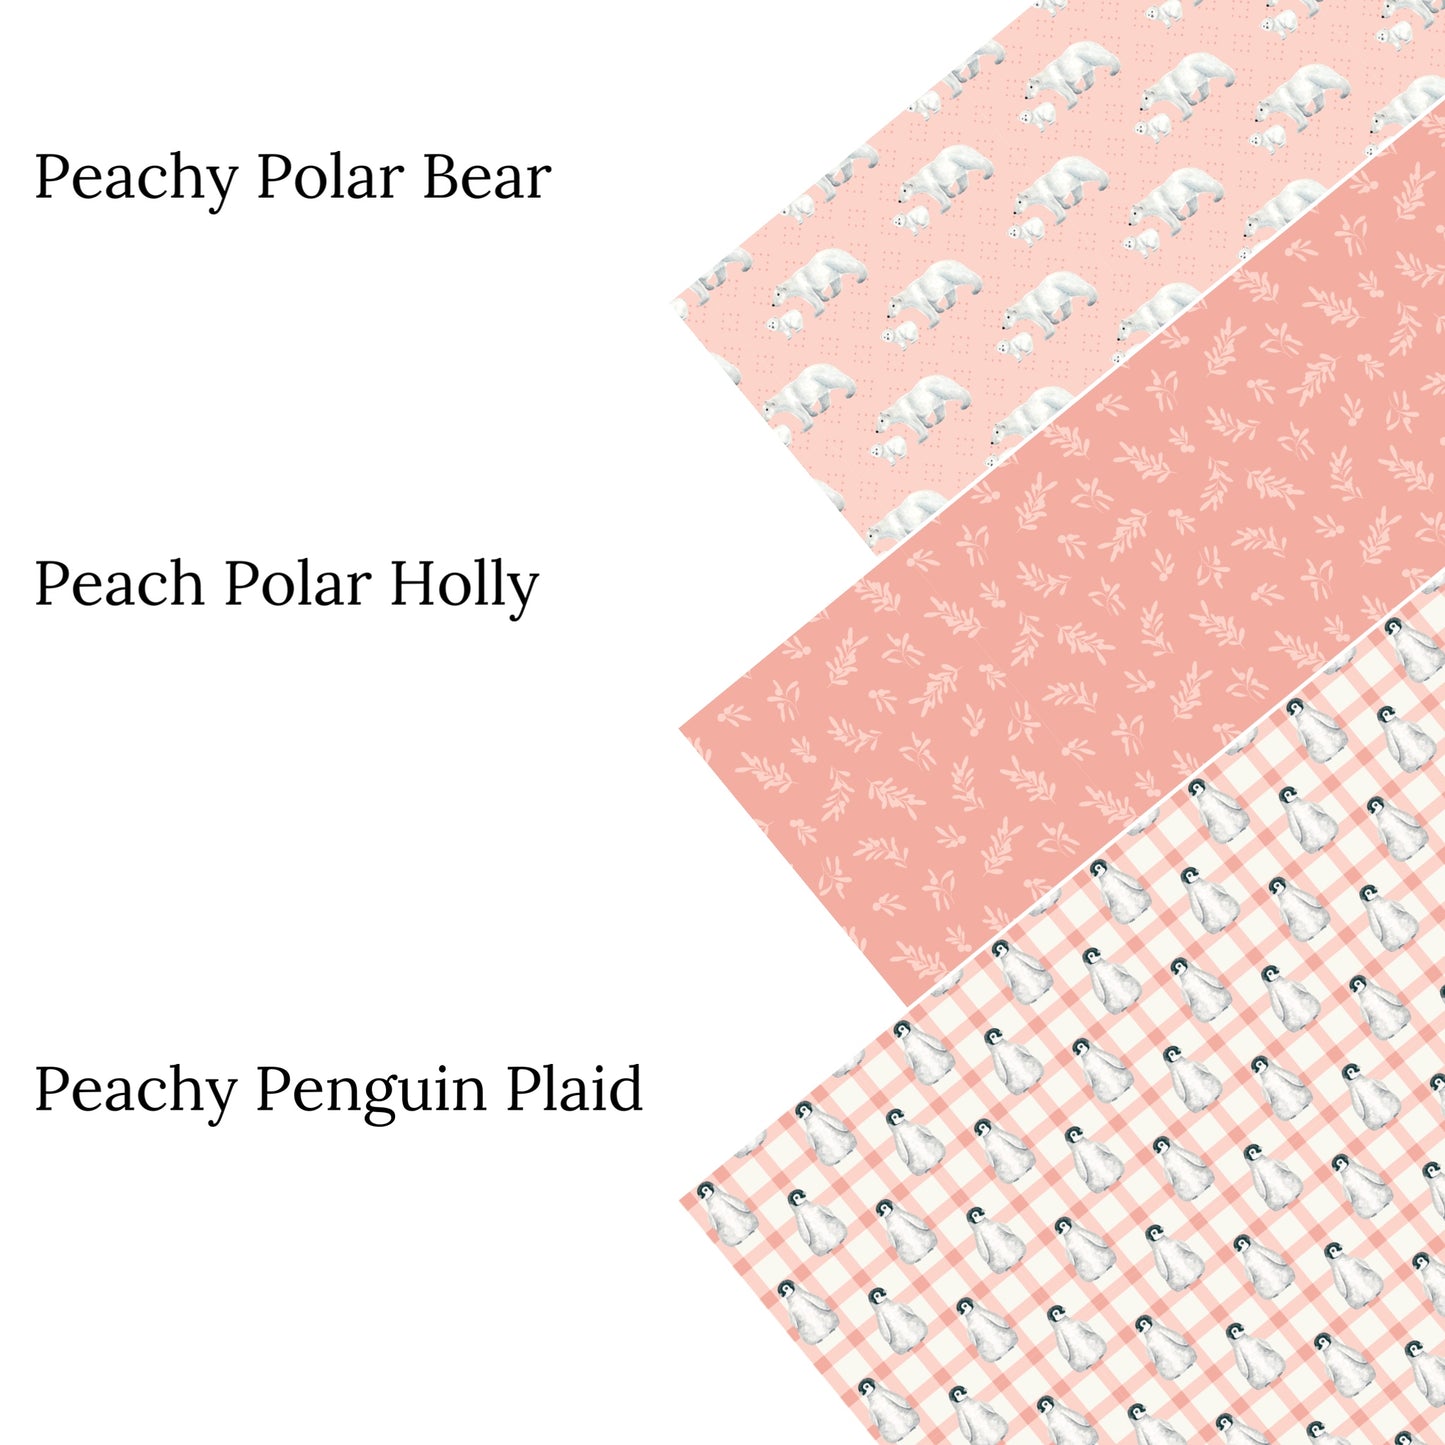 Peachy Penguin Plaid Faux Leather Sheets